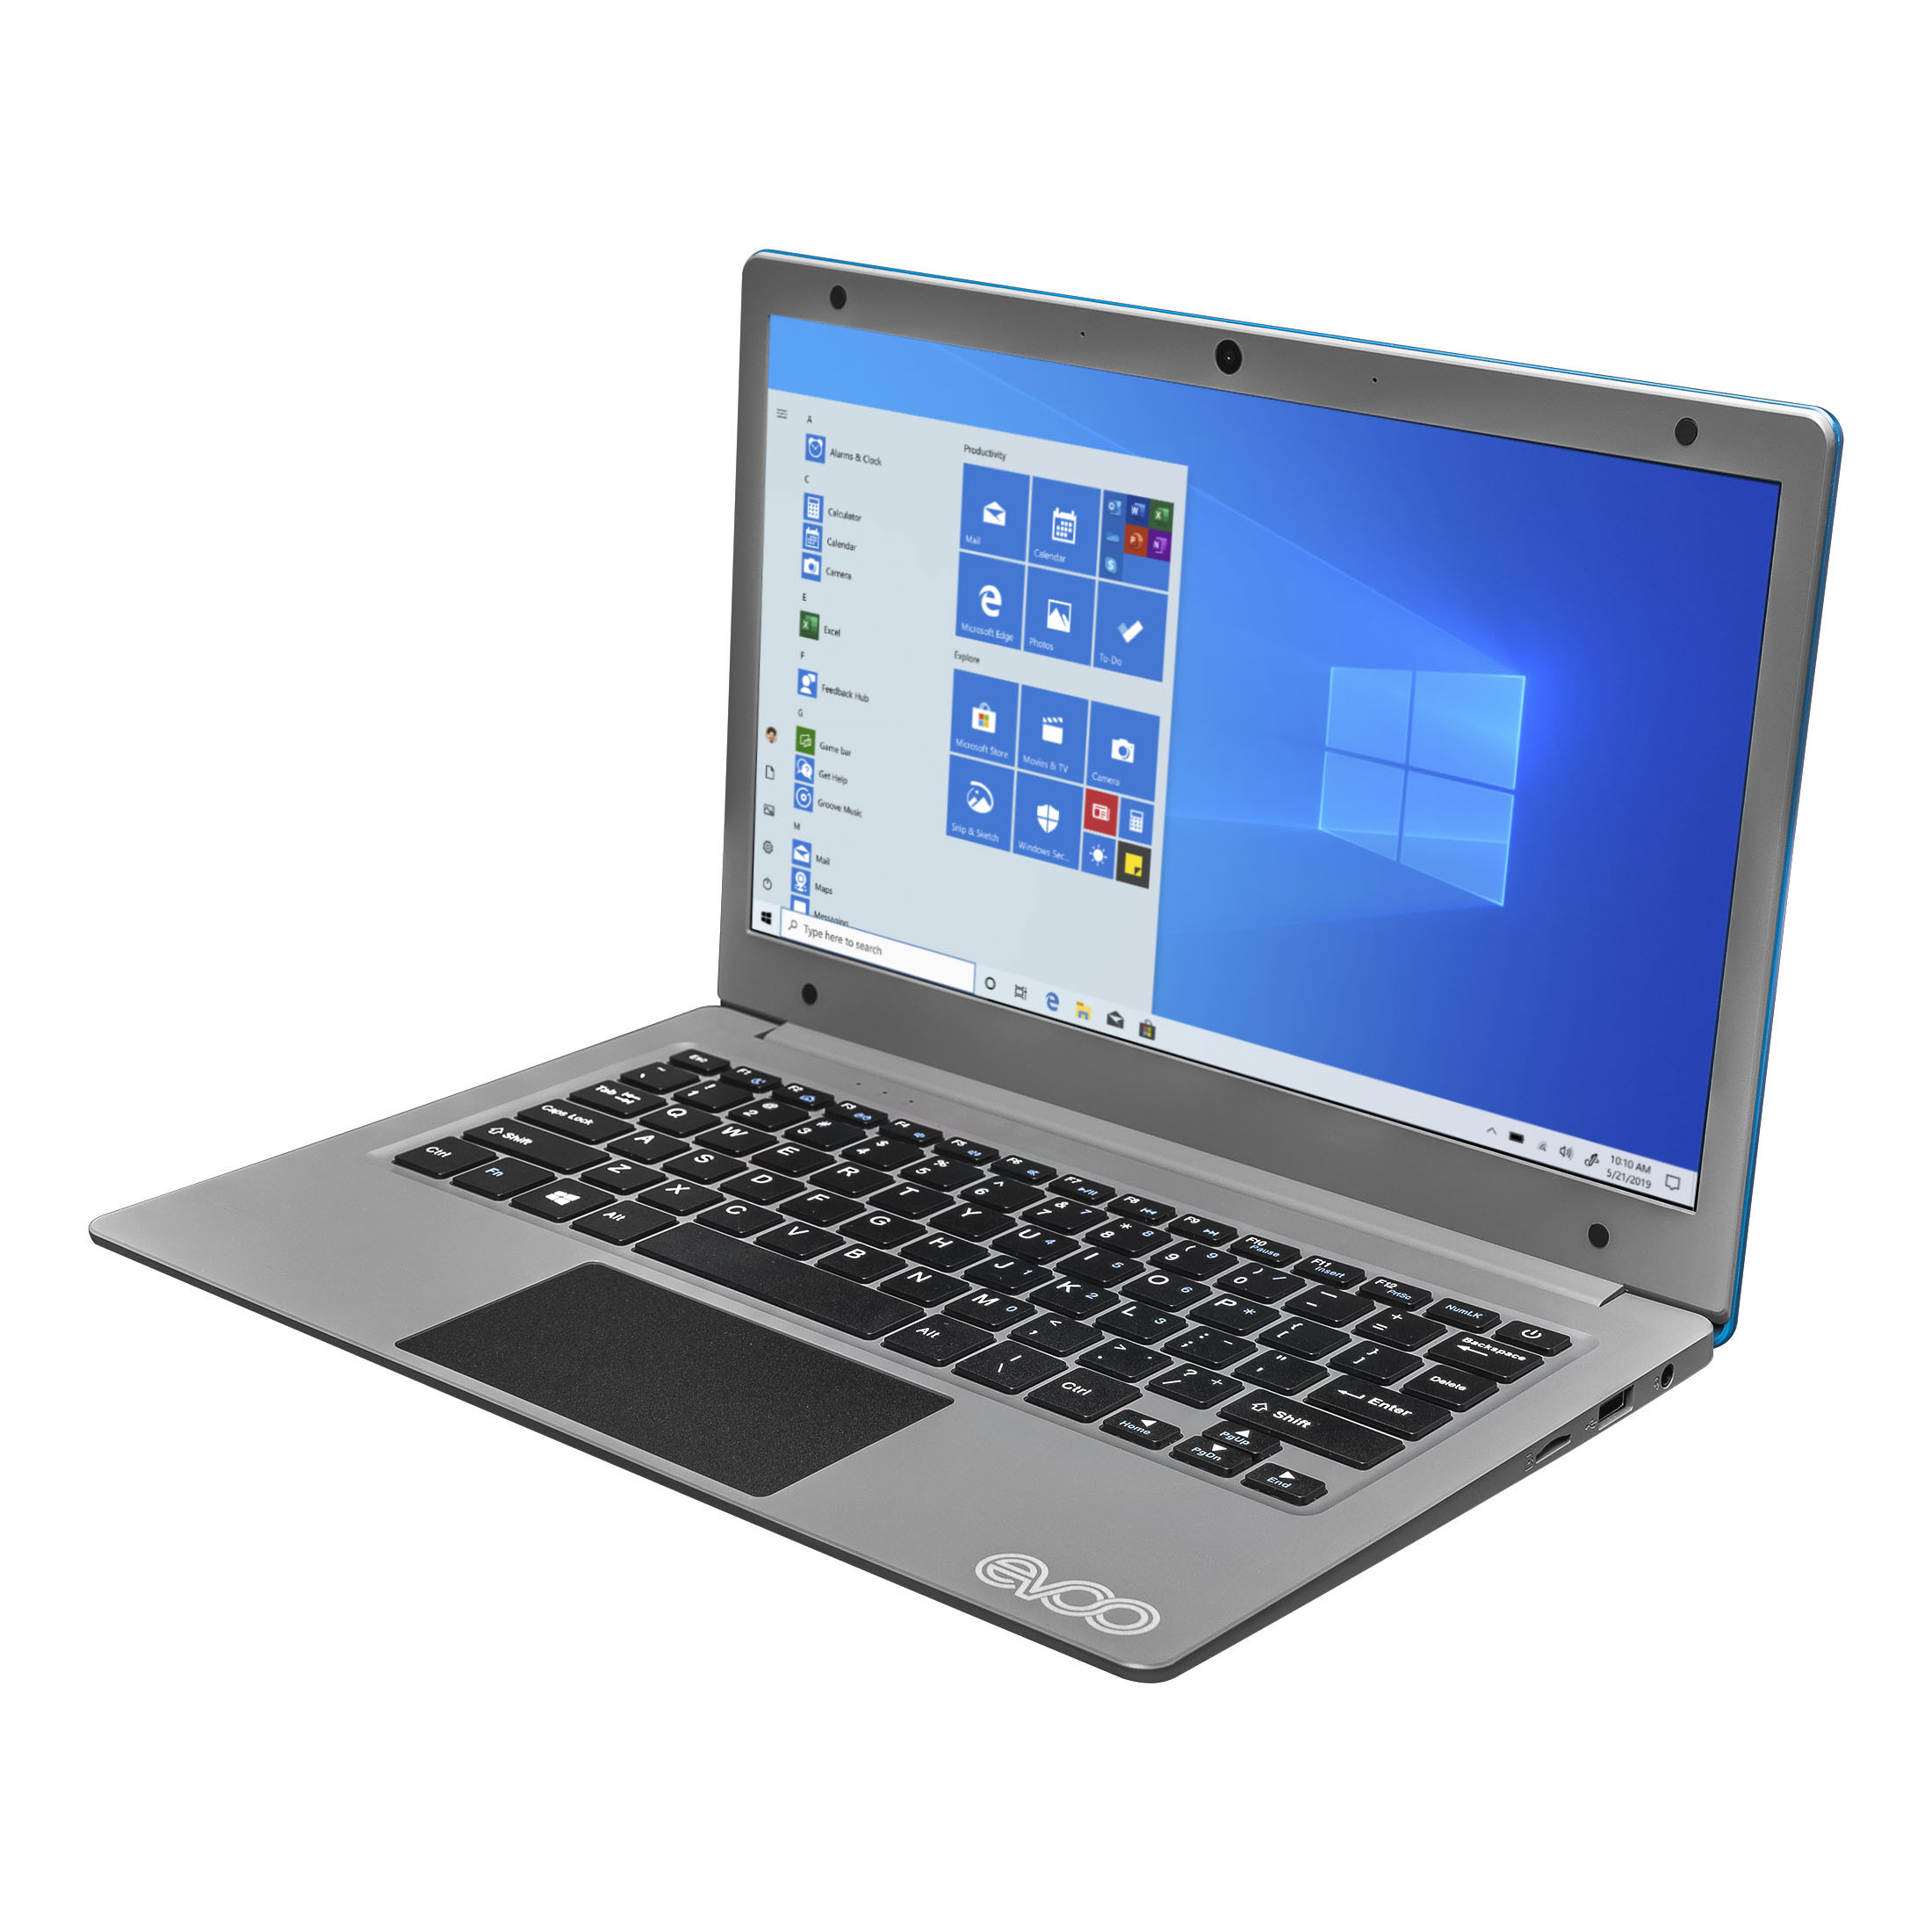 EVOO Notebook 11.6" Laptop, Intel Celeron N4000, 4GB RAM, 64GB HD, Windows 10 Home, Blue - image 5 of 5